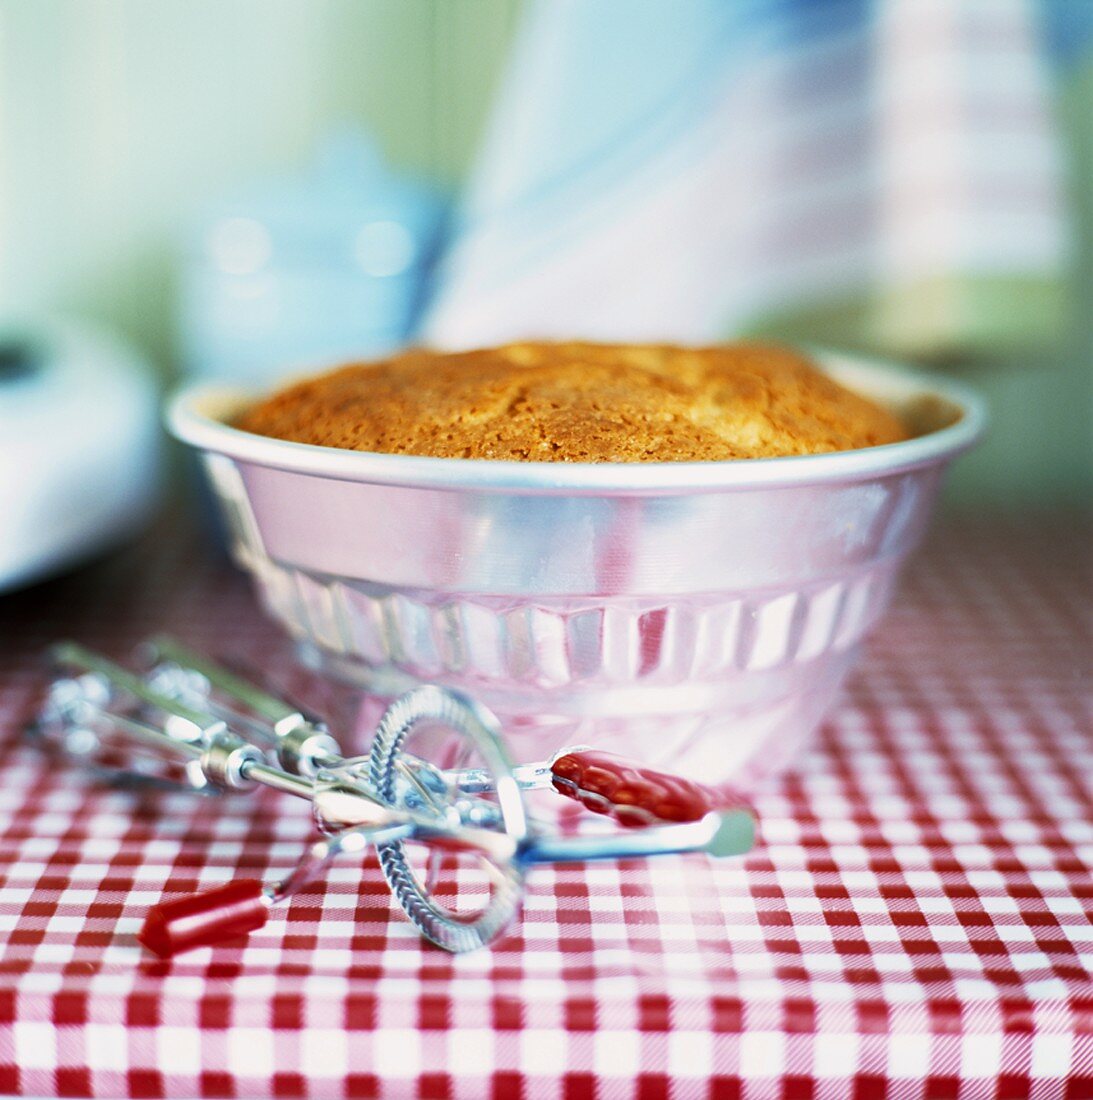 Ring cake in baking tin on kitchen table